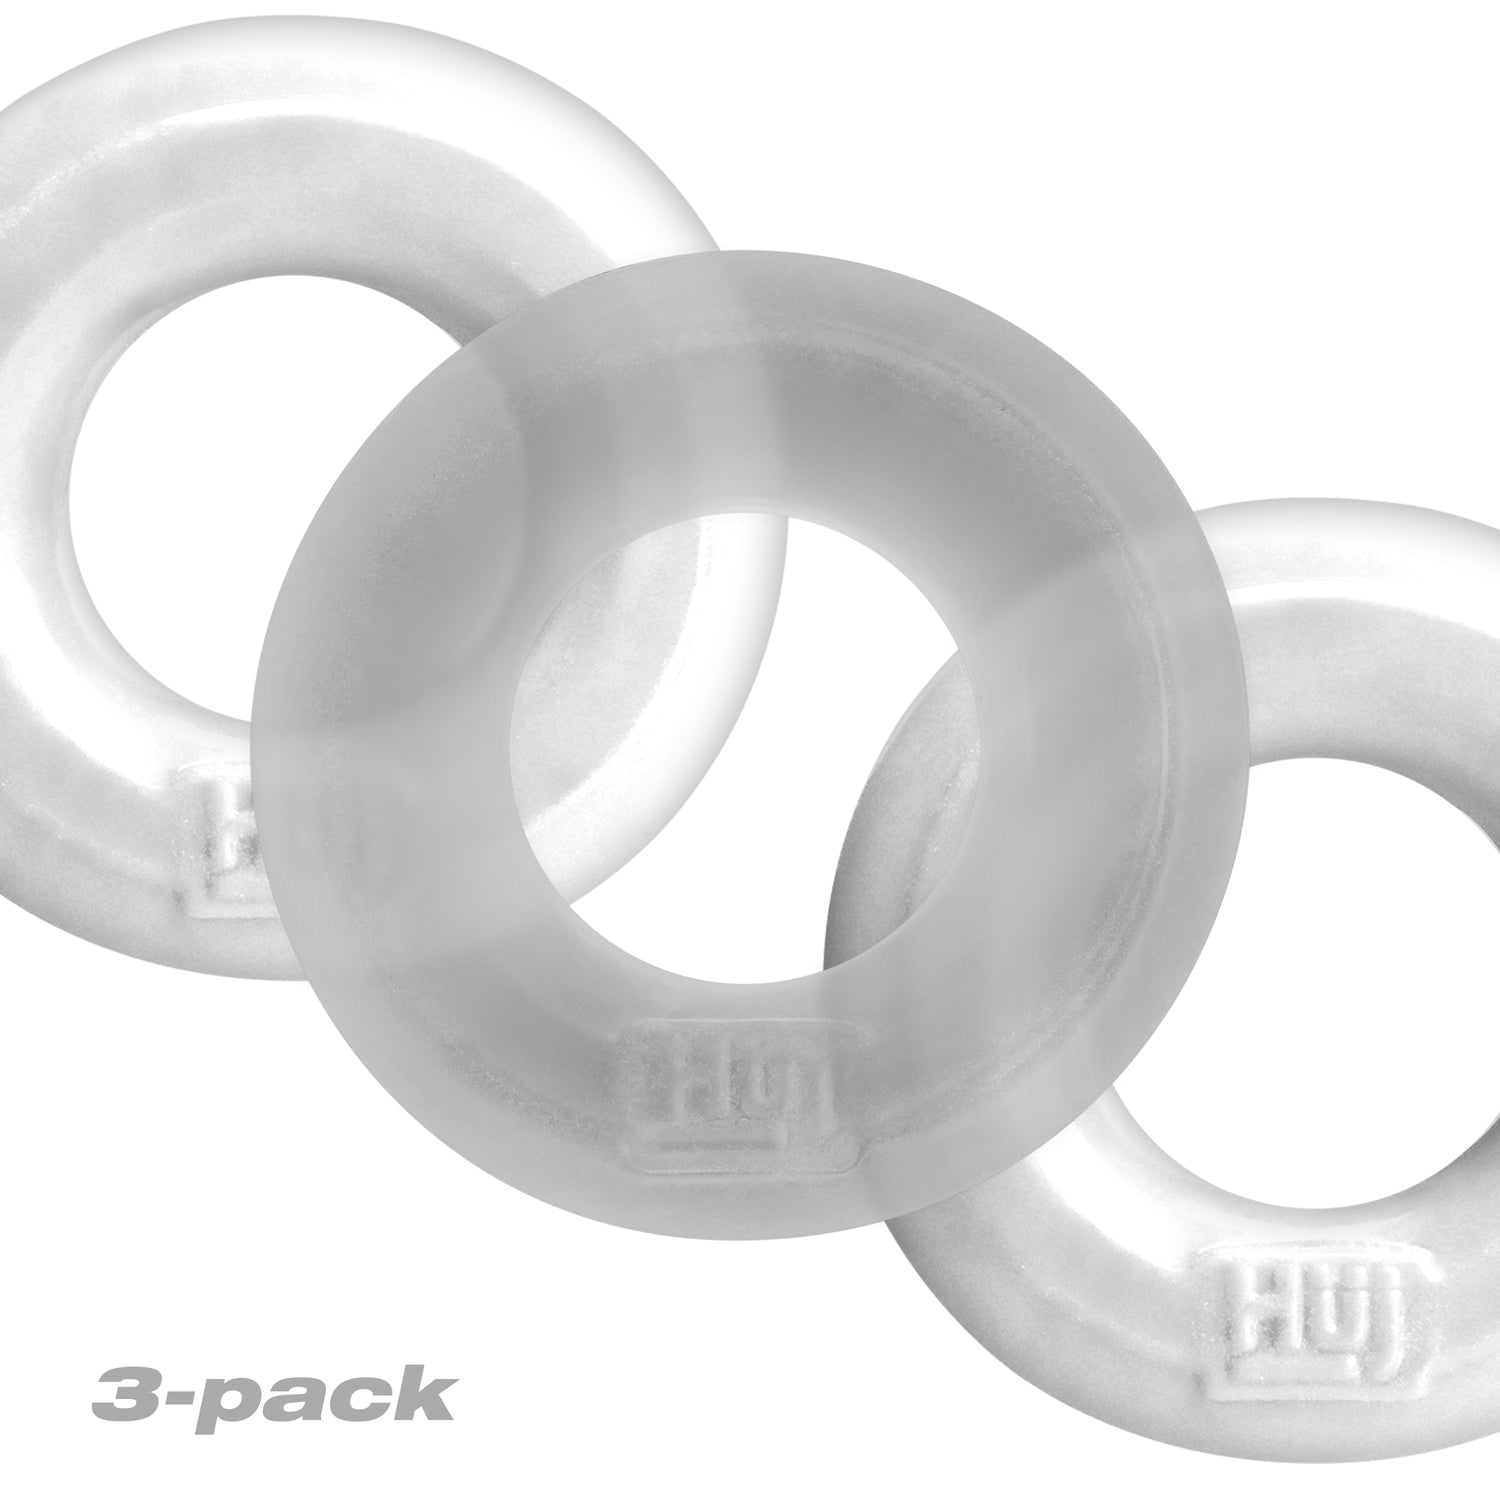 Hunkyjunk 3 C-ring 3-Pack